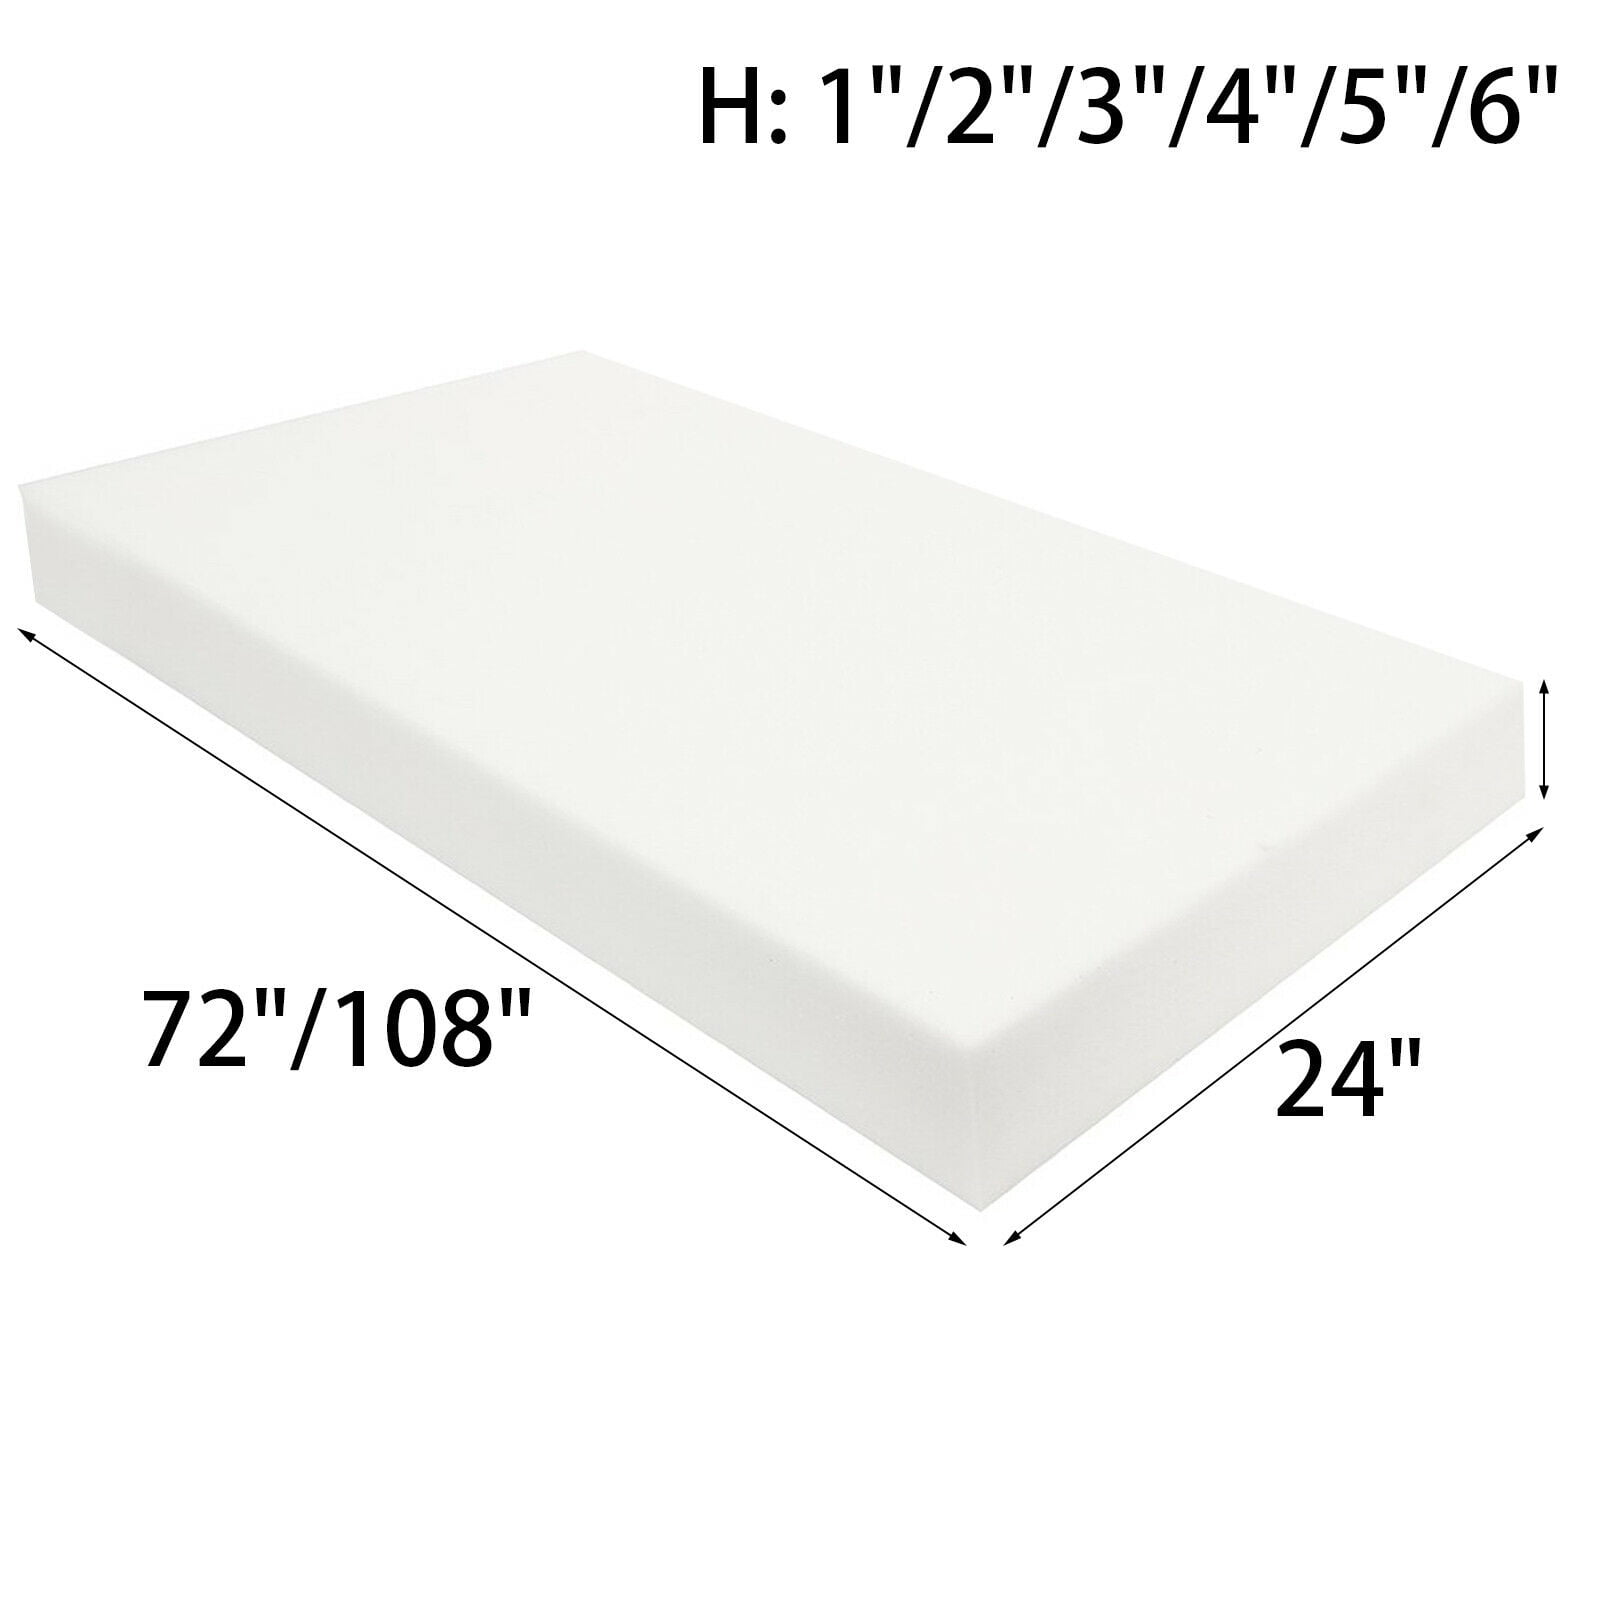 High Density Upholstery Foam Seat Sofa Cushion Replacement Sheets Foam ...